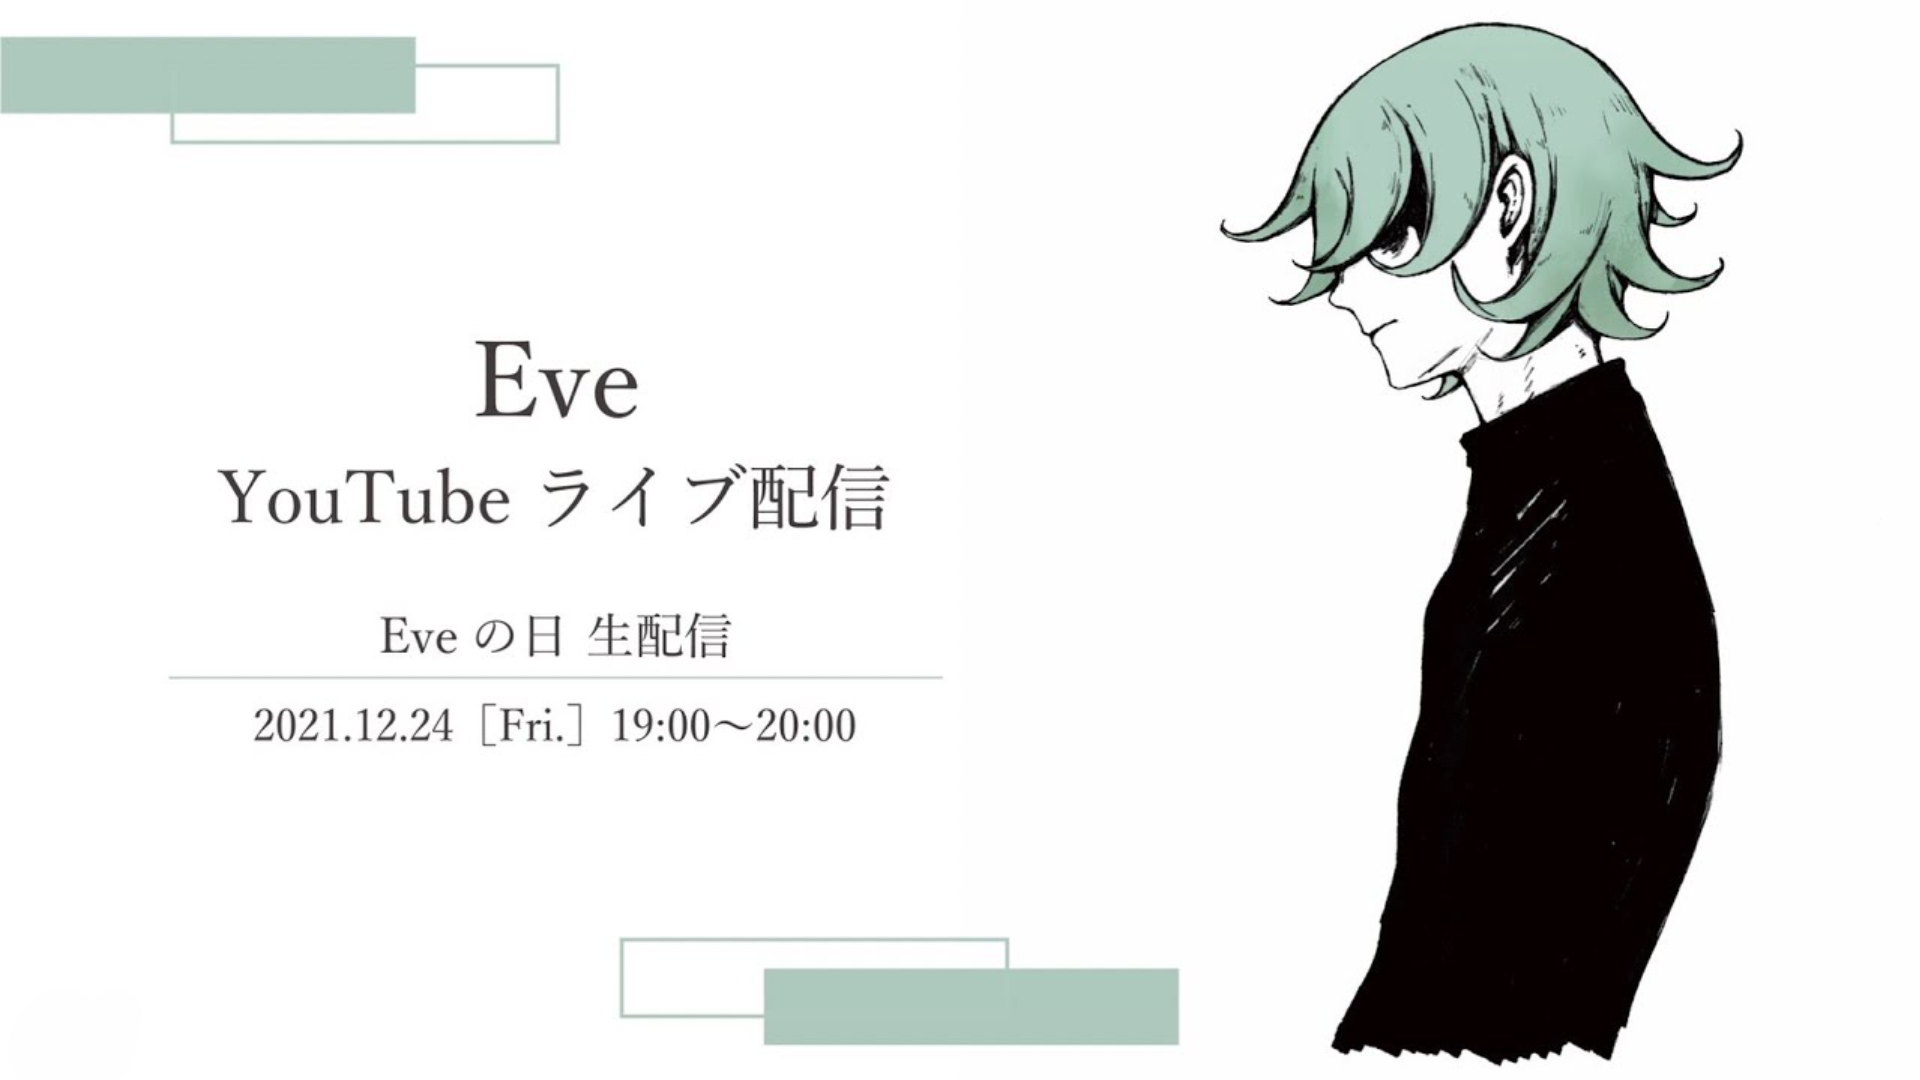 Eve Eveの日 Youtubeライブ配信 無料 ライブ配信カレンダー22 オンラインライブ情報